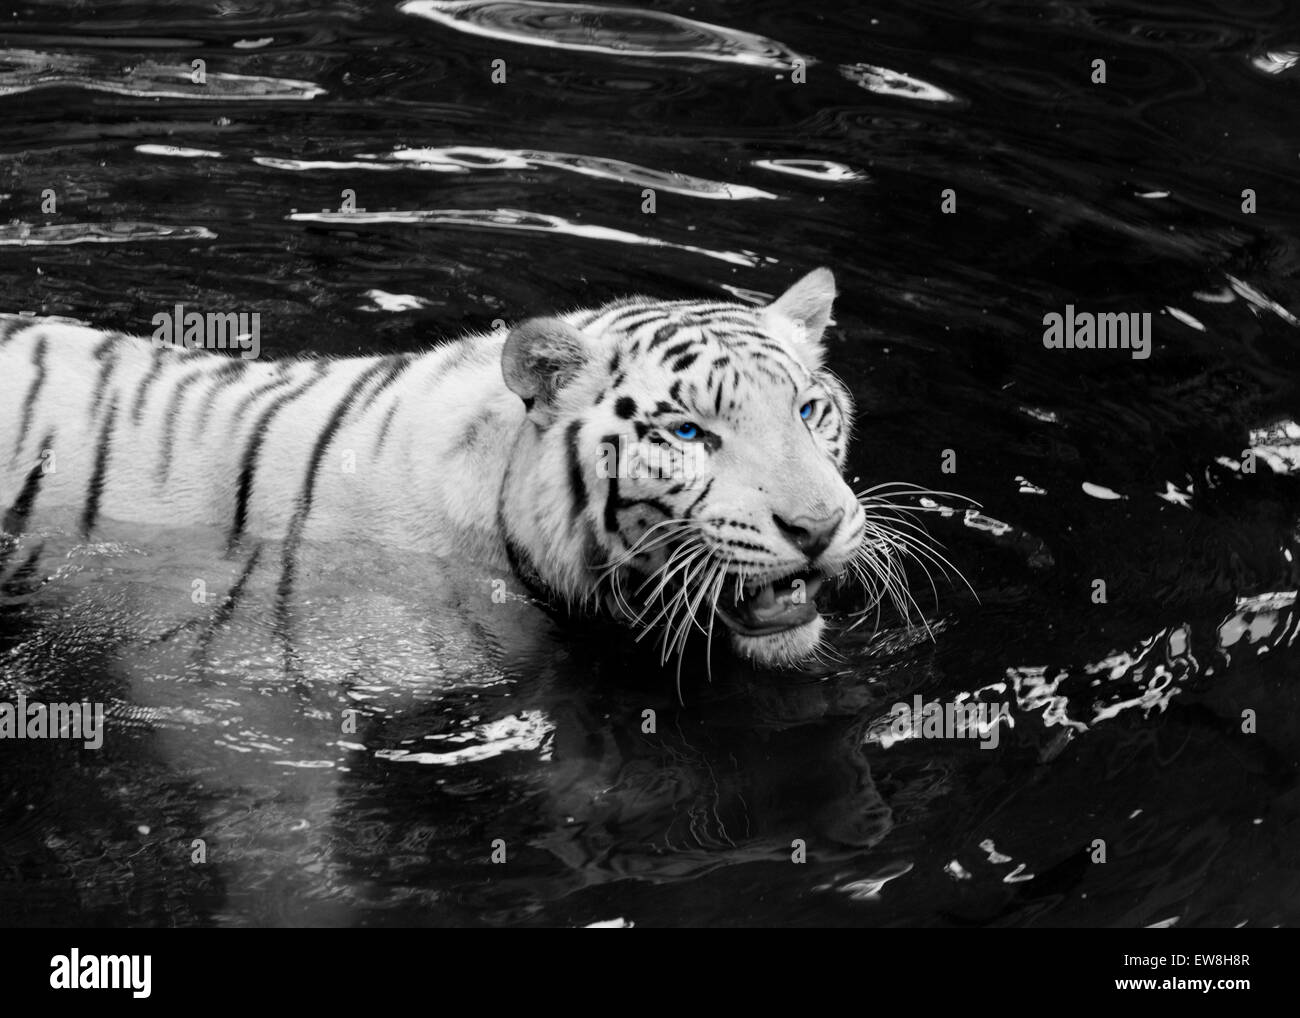 White Tiger at Singapore Zoo wading through the water Stock Photo